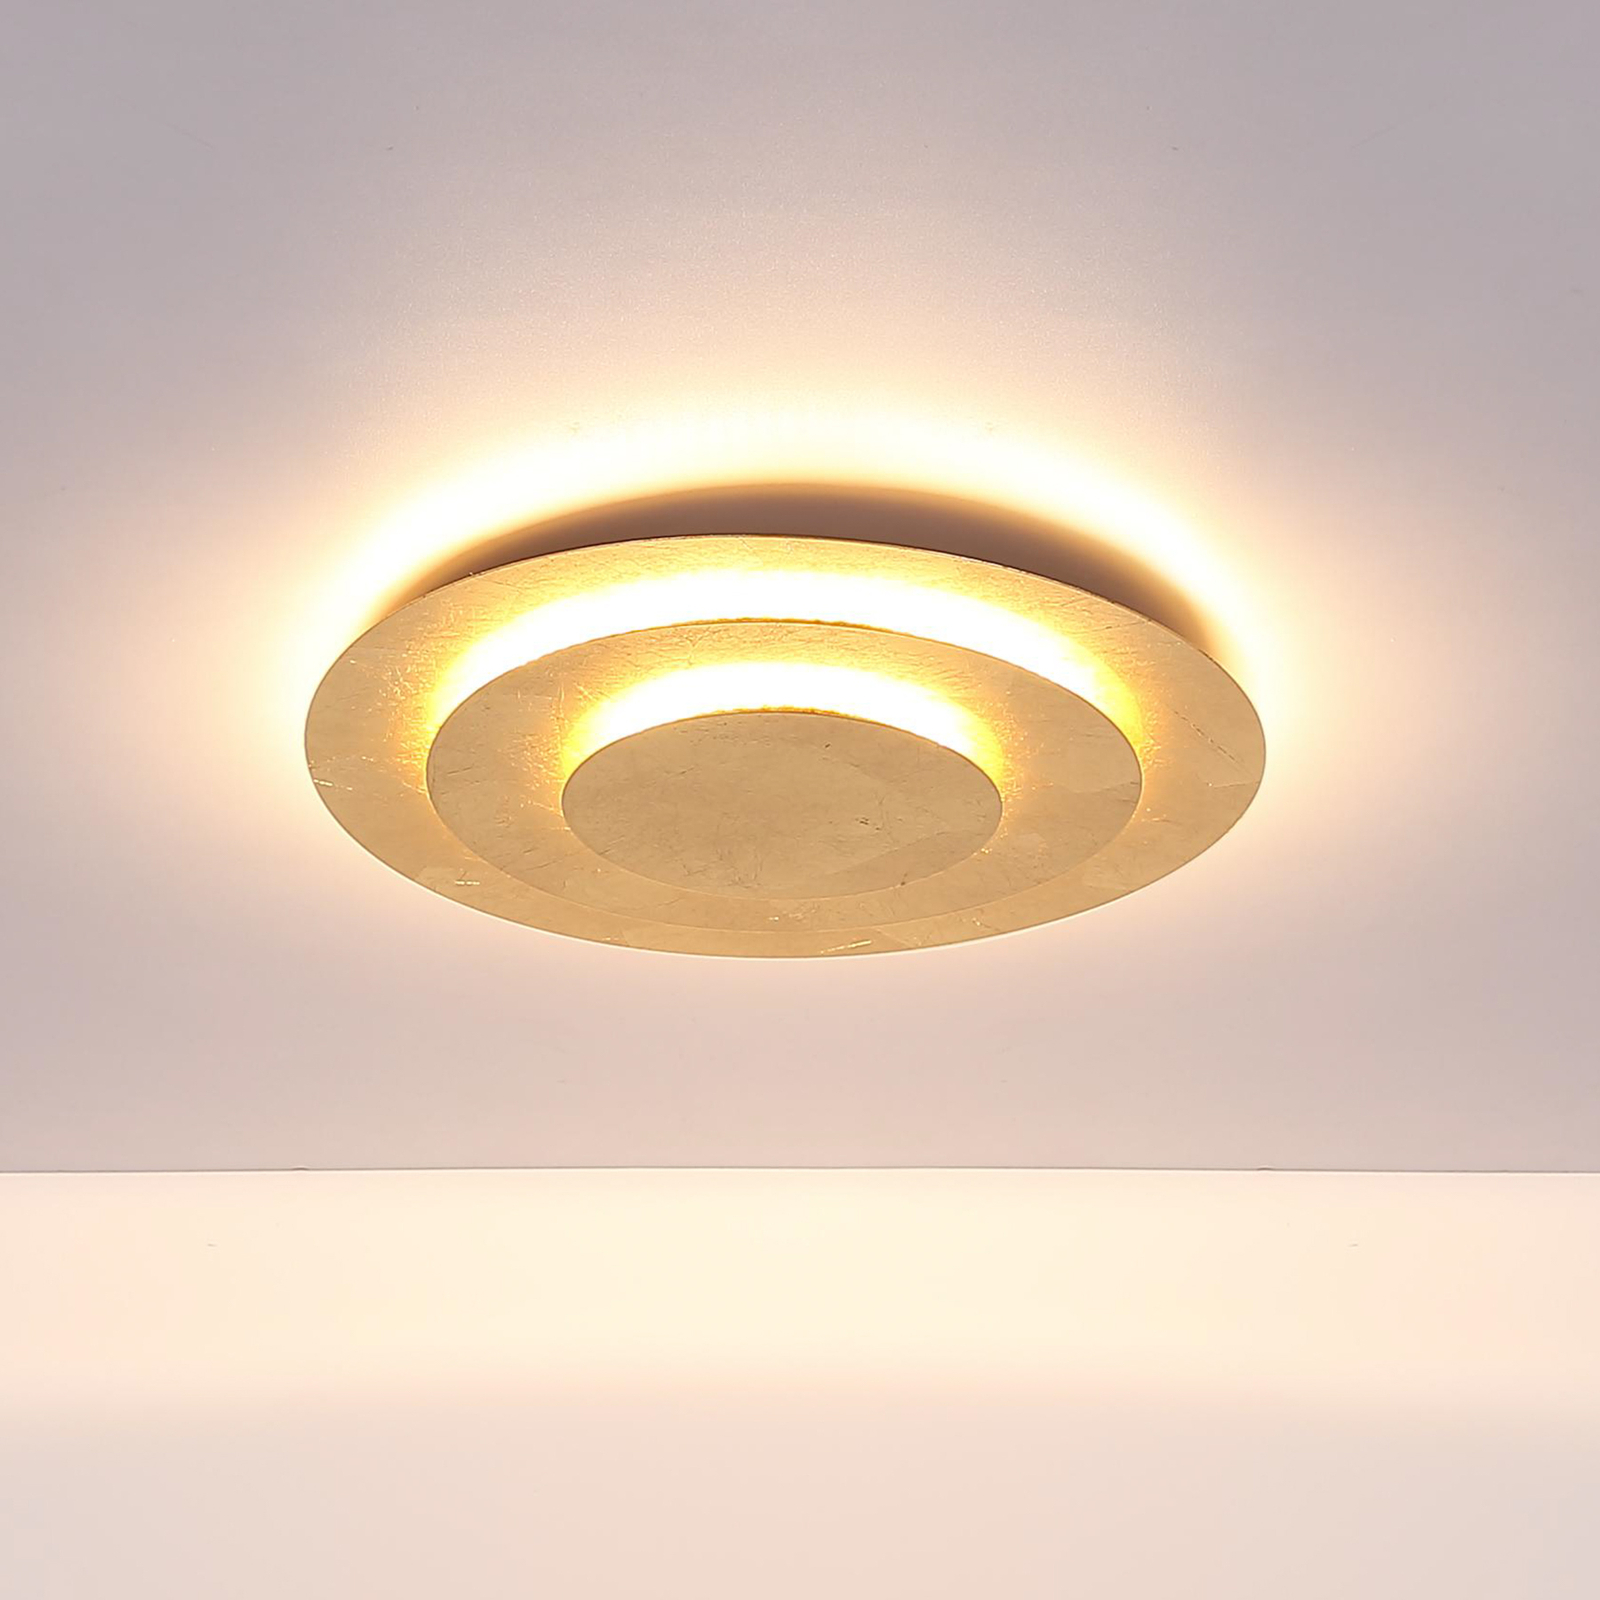 Lampa sufitowa LED Heda, Ø 49 cm, kolor złoty, metal